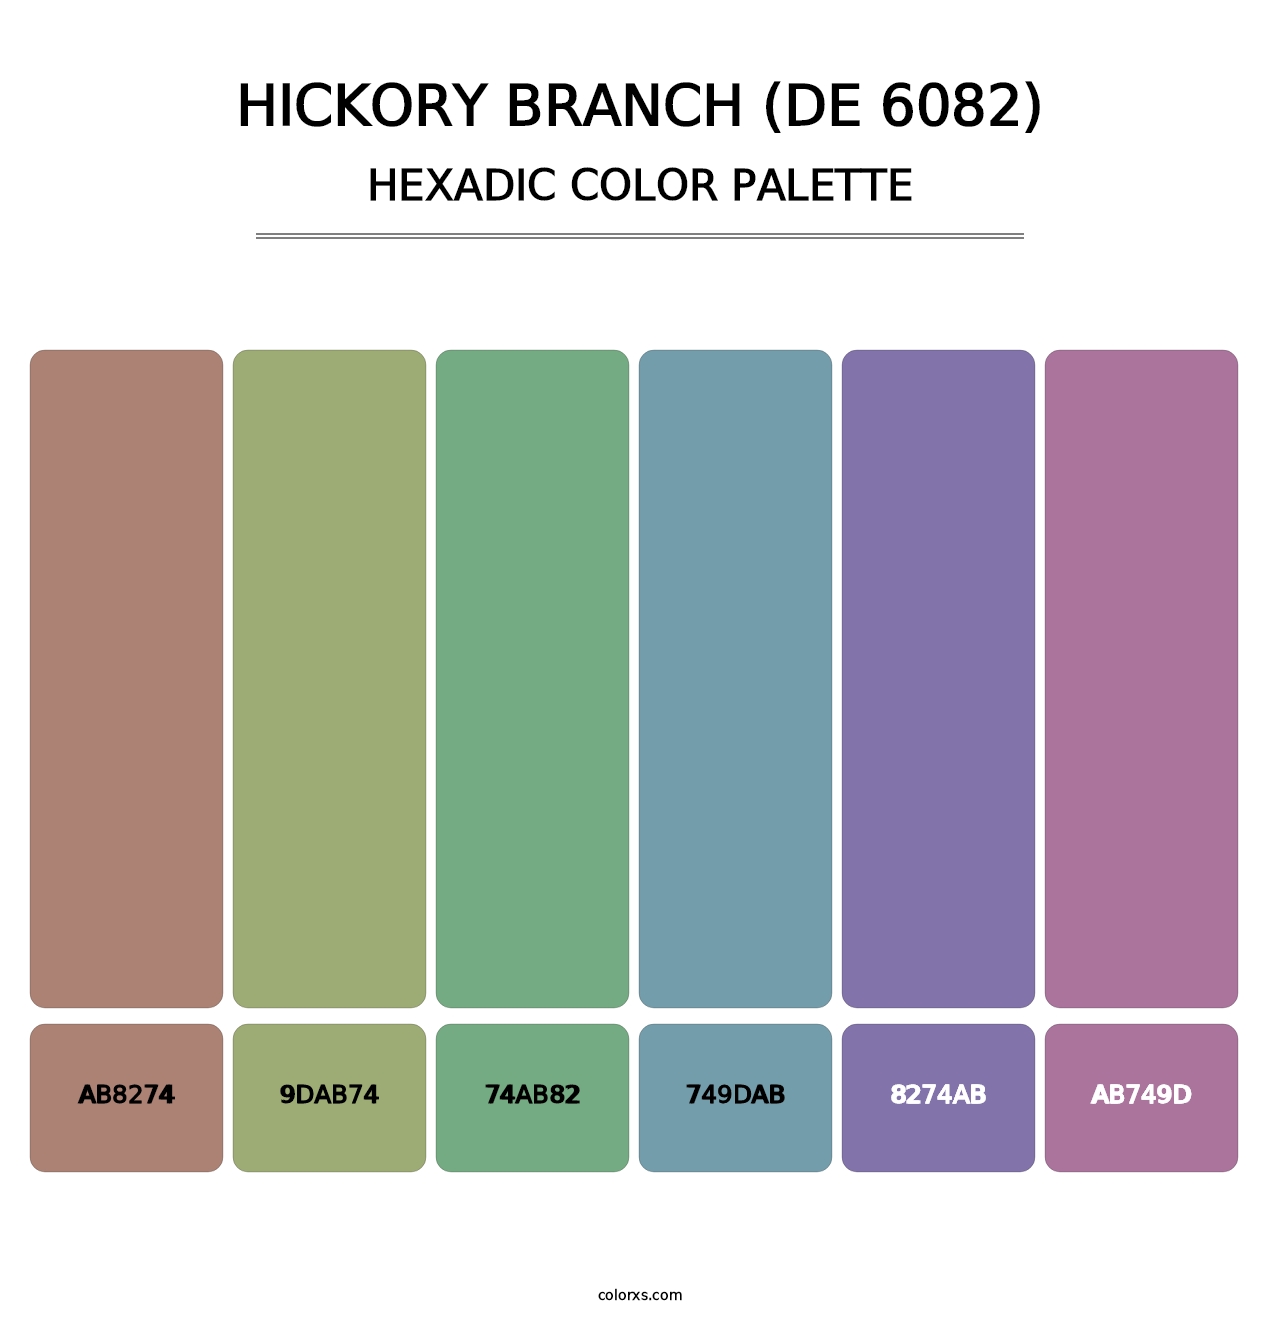 Hickory Branch (DE 6082) - Hexadic Color Palette